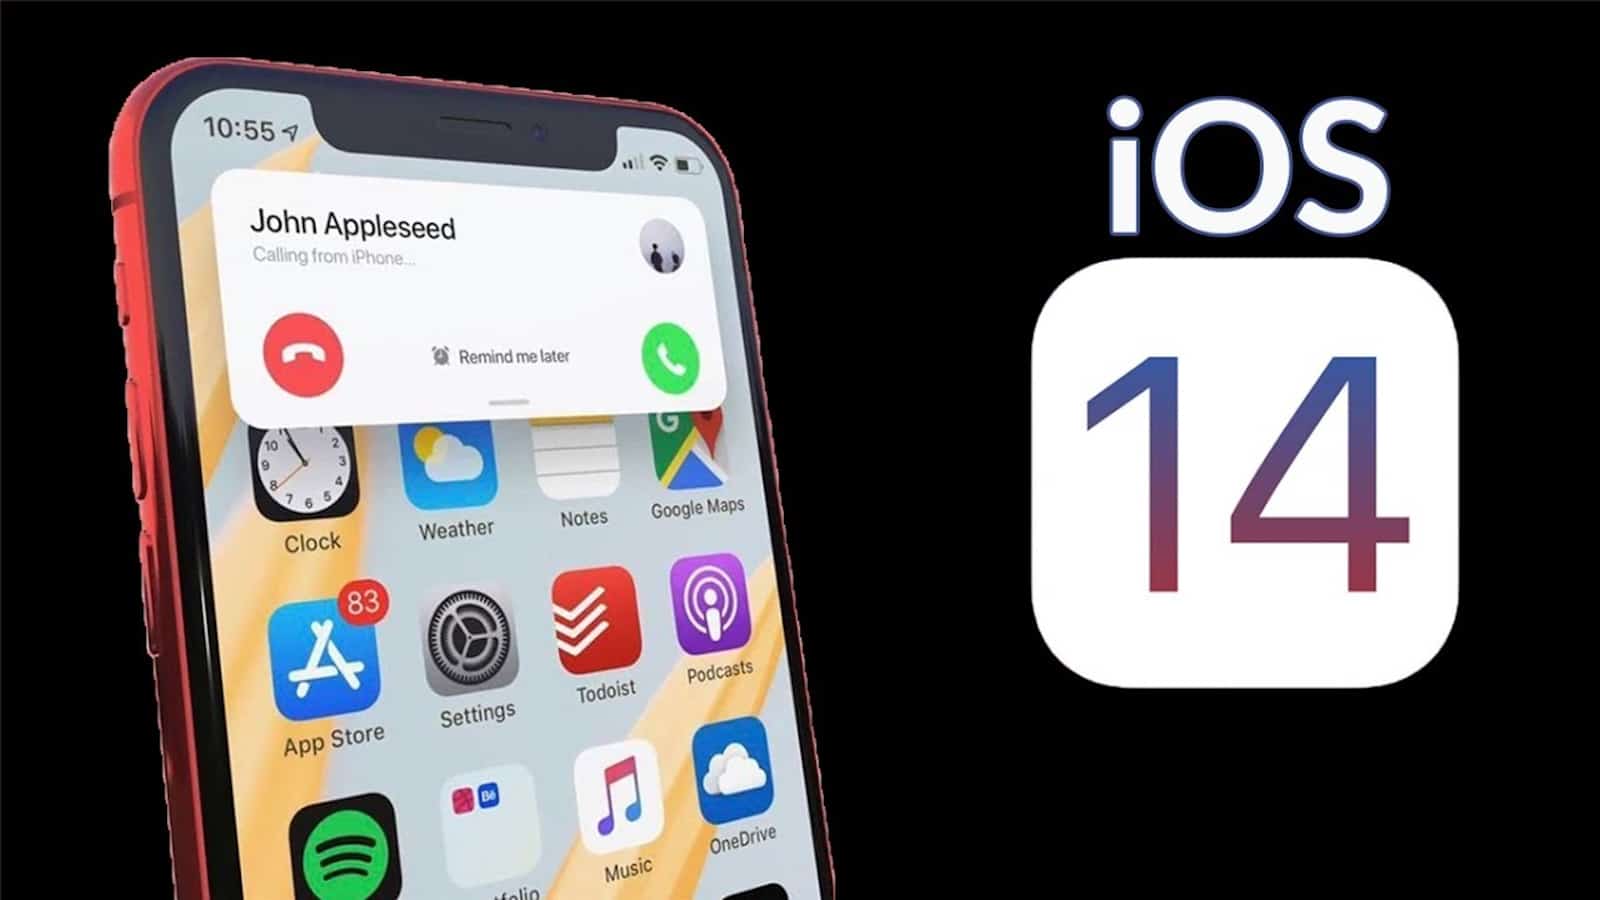 apple ios 10.14 download